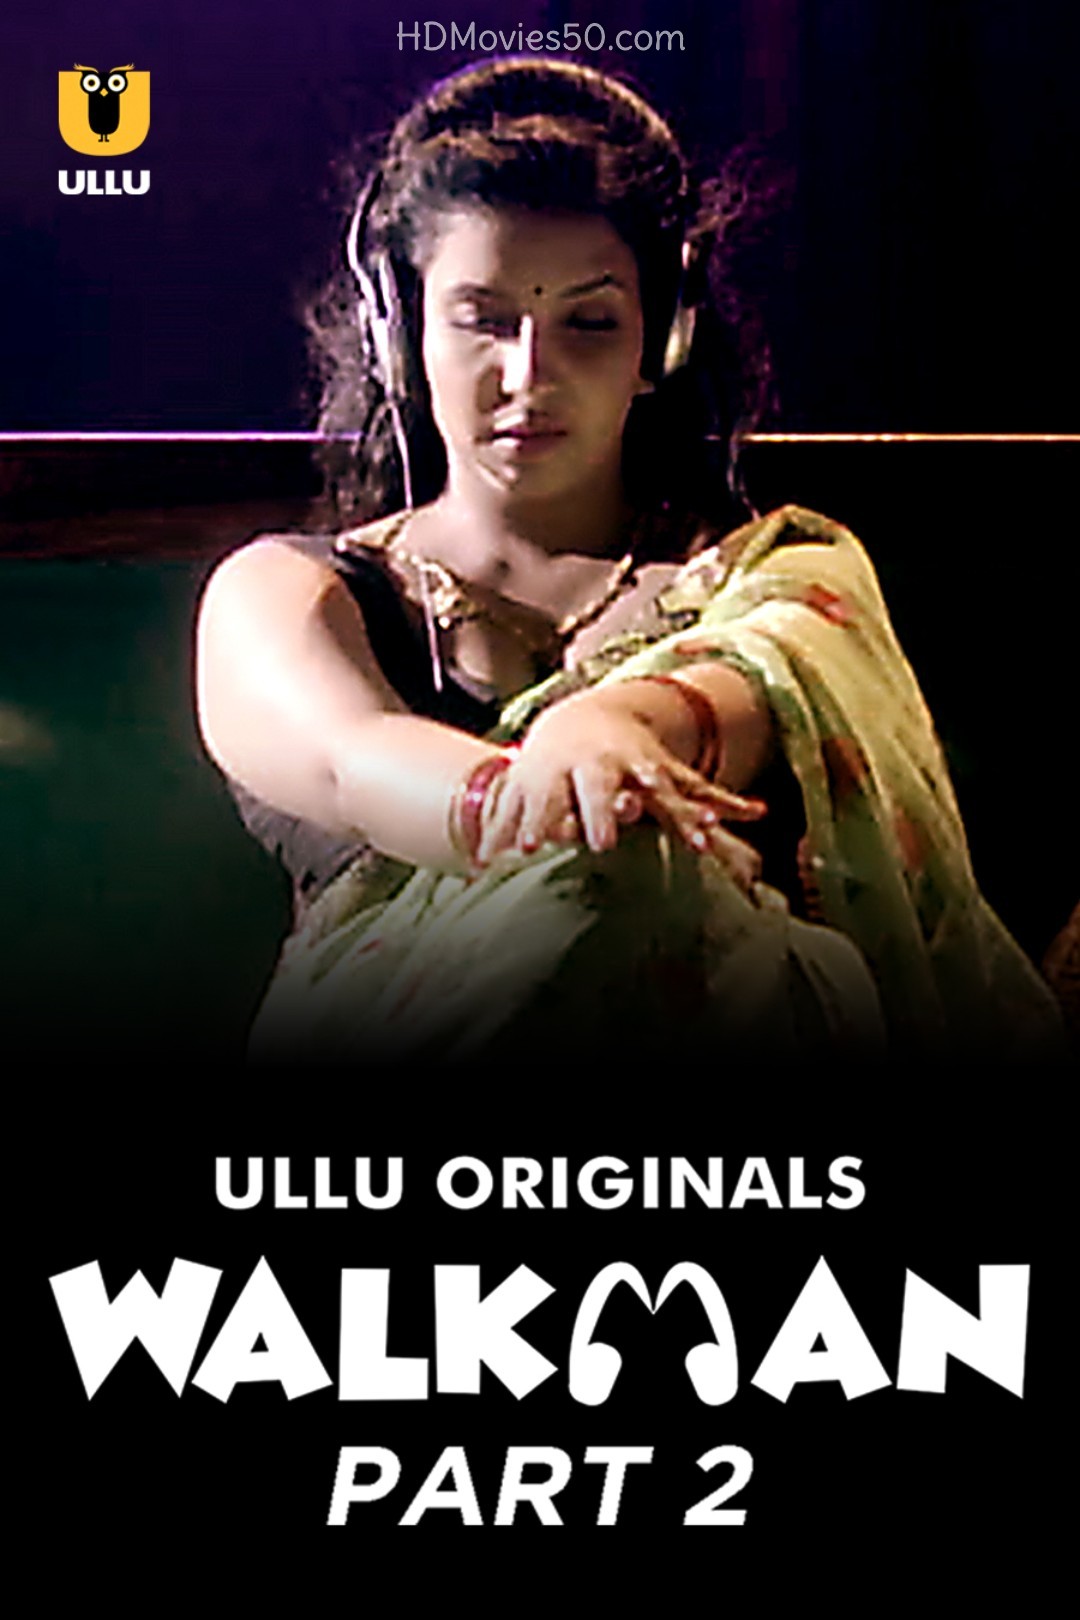 Walkman Part 2 (2022) 480p HDRip Ullu Hindi Web Series [250MB]